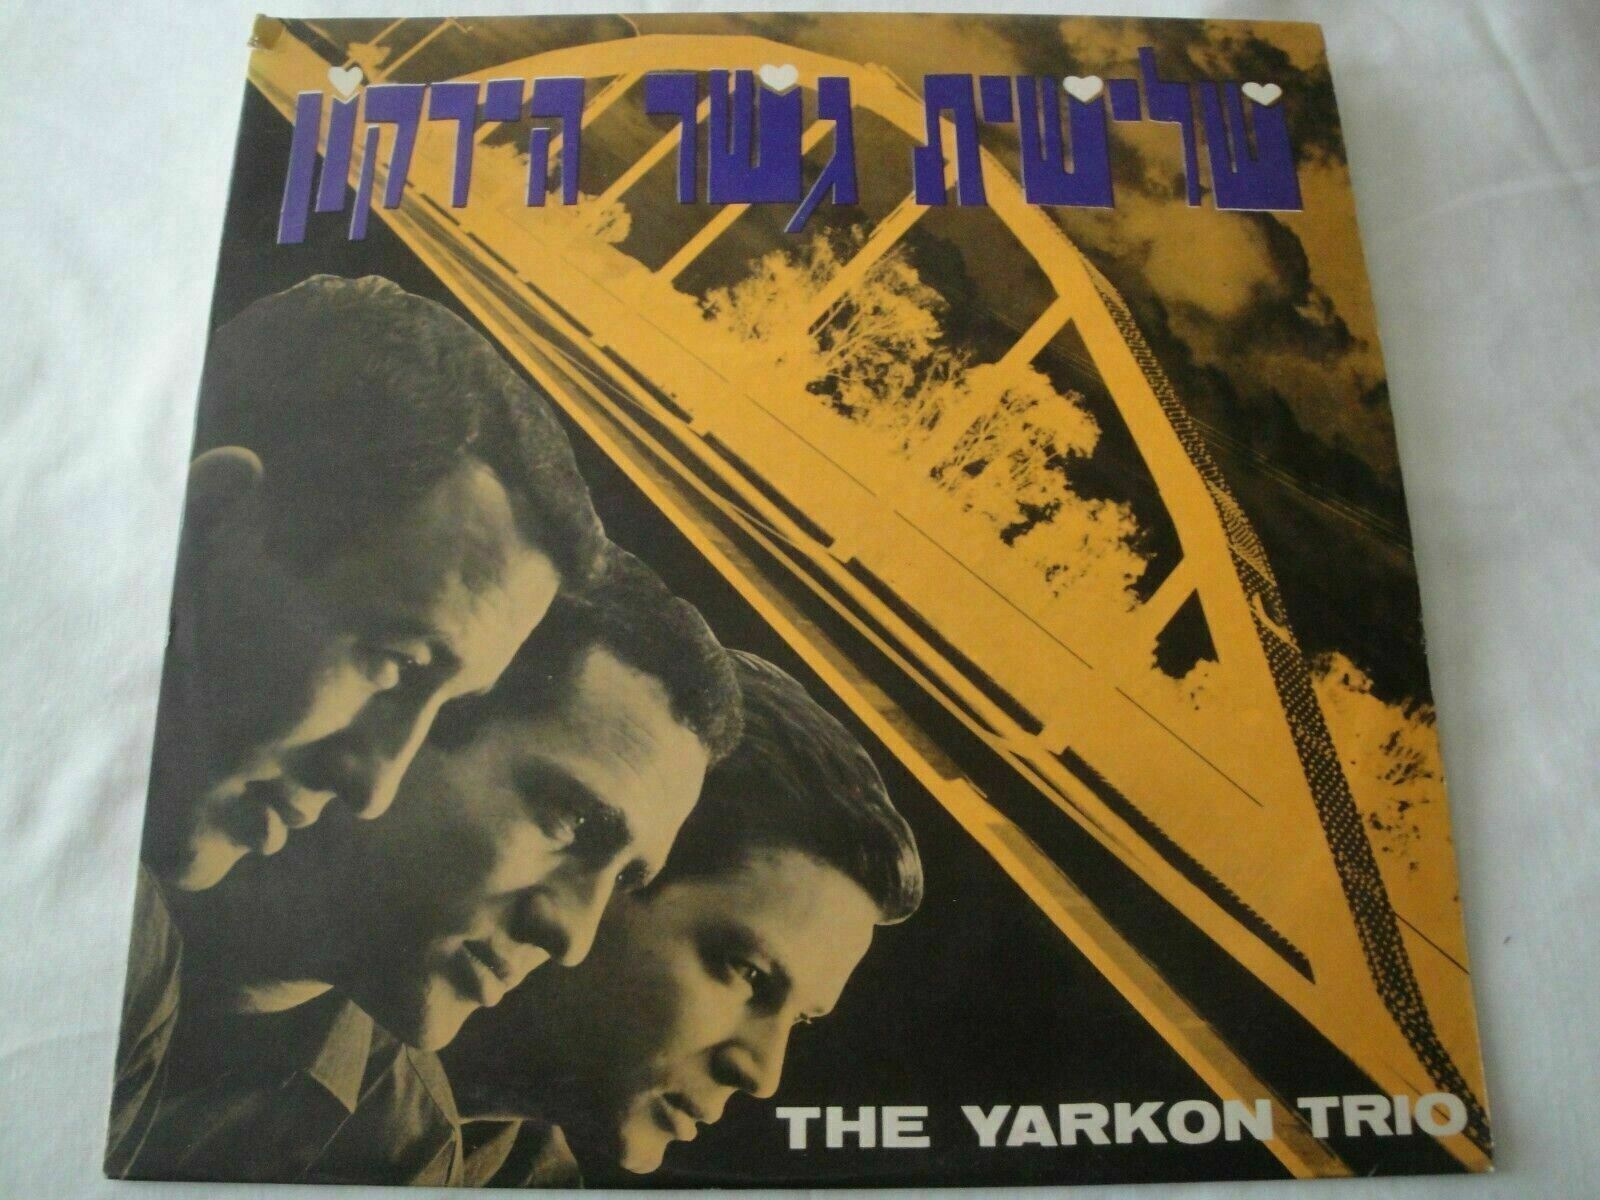 FIRST LOVE THE YARKON TRIO VINYL LP ALBUM 1965 ISRAPHON RECORDS EL HAMAM THEATER